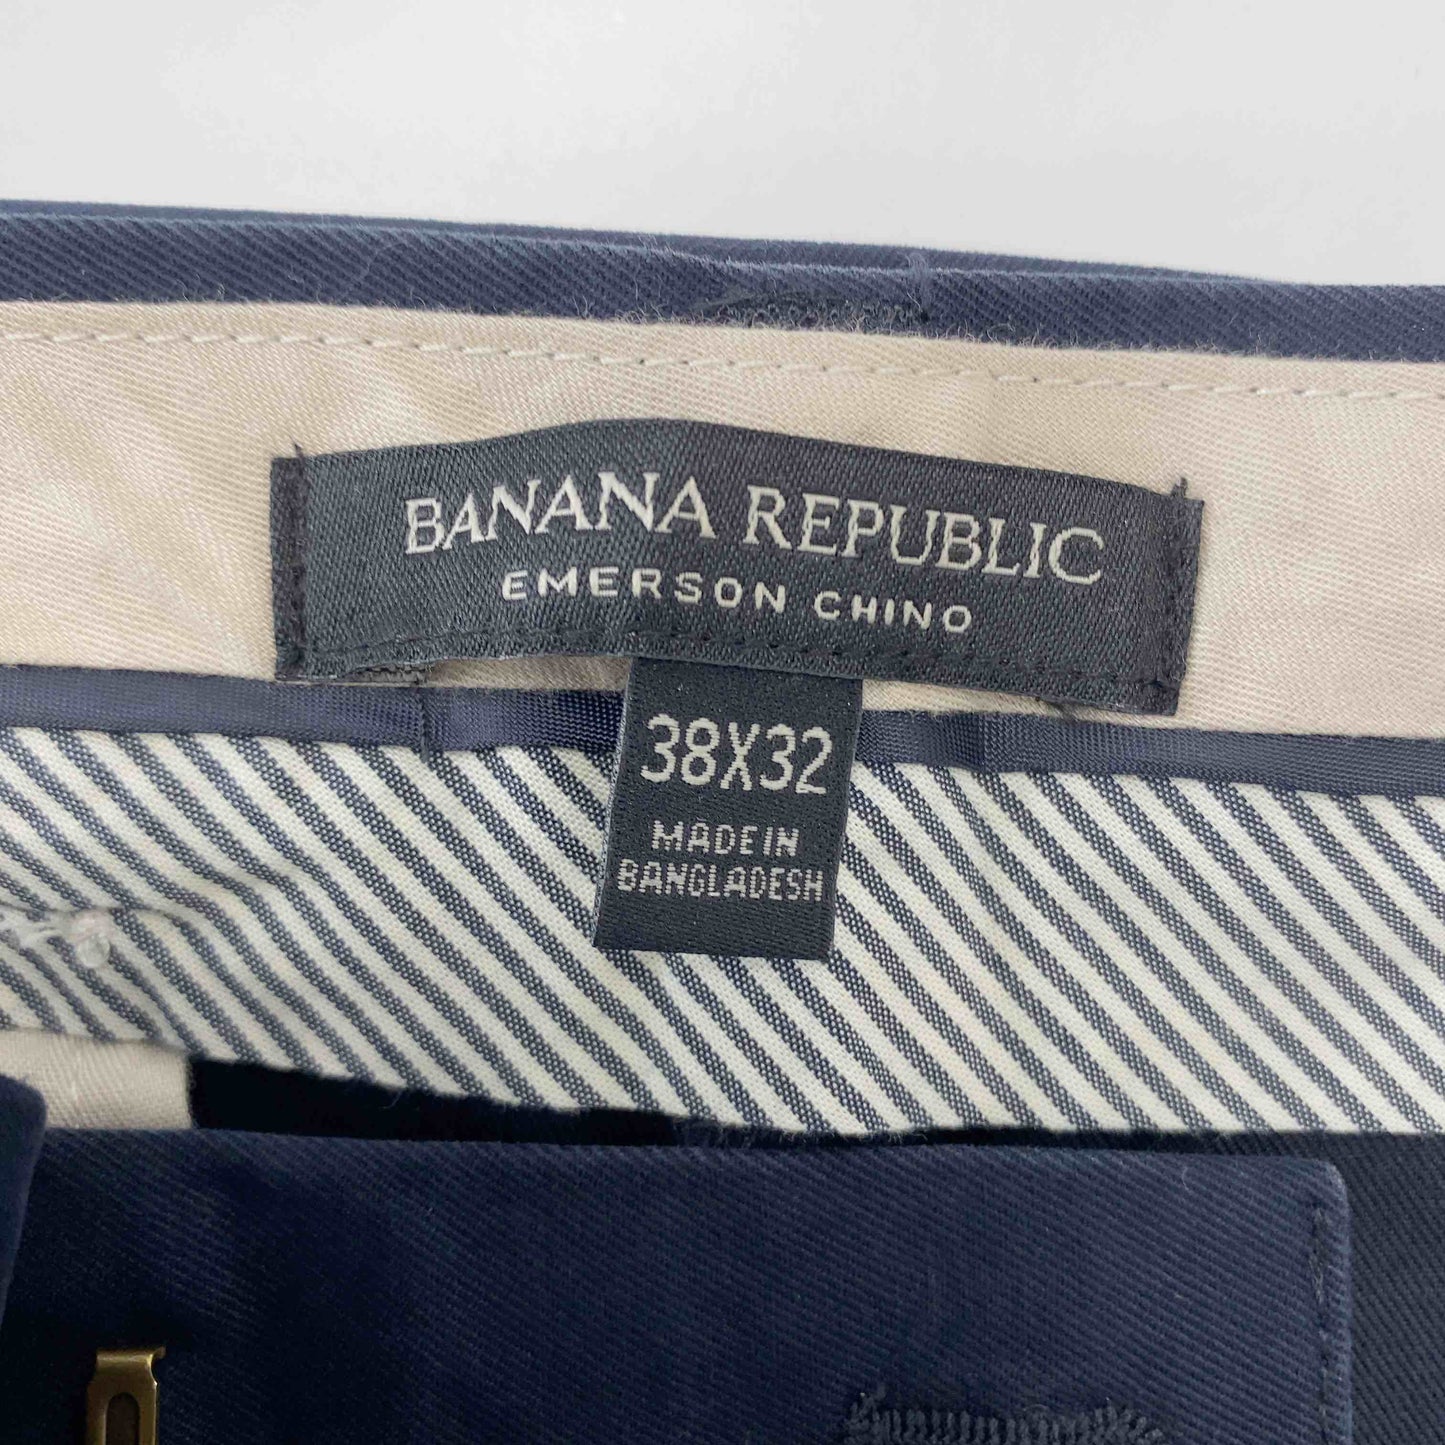 BANANA REPUBLIC バナナリパブリック メンズ ワークパンツ 紺色 tk